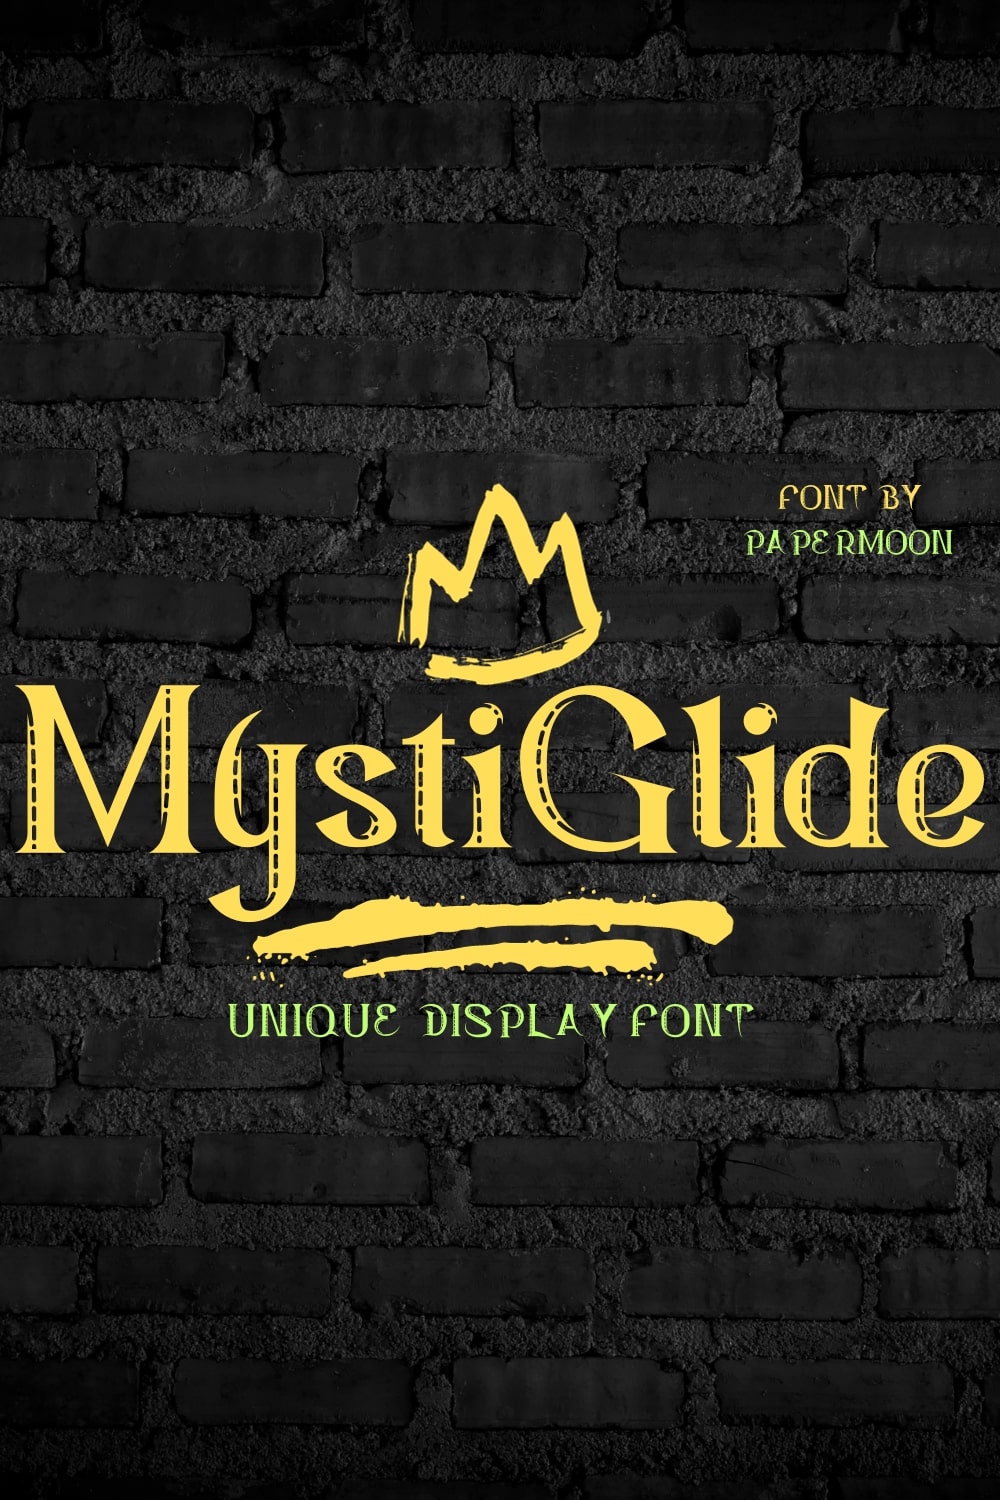 MysticGlide: Unique Display Font pinterest preview image.